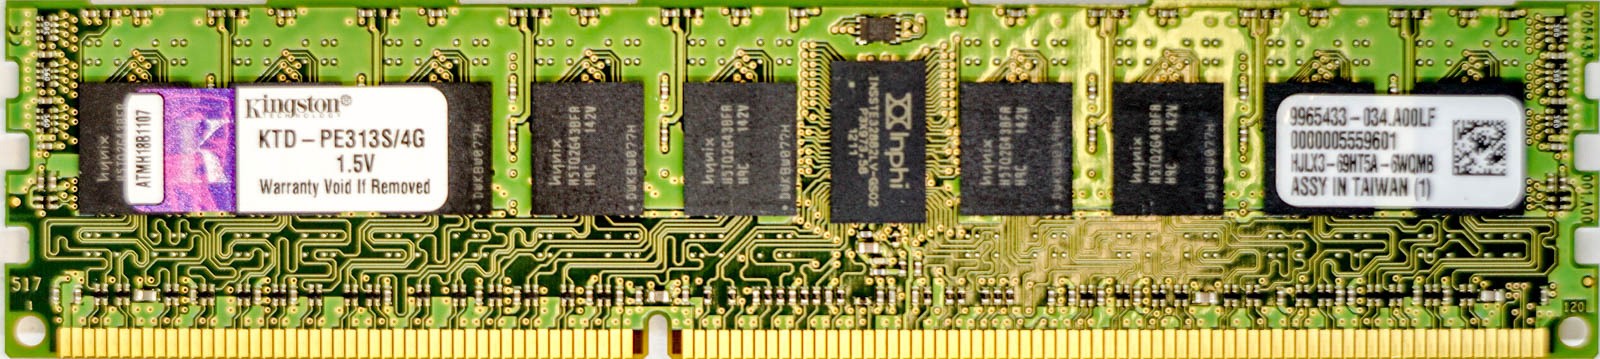 Kingston - 4GB PC3-10600R (DDR3-1333Mhz, 1RX4)